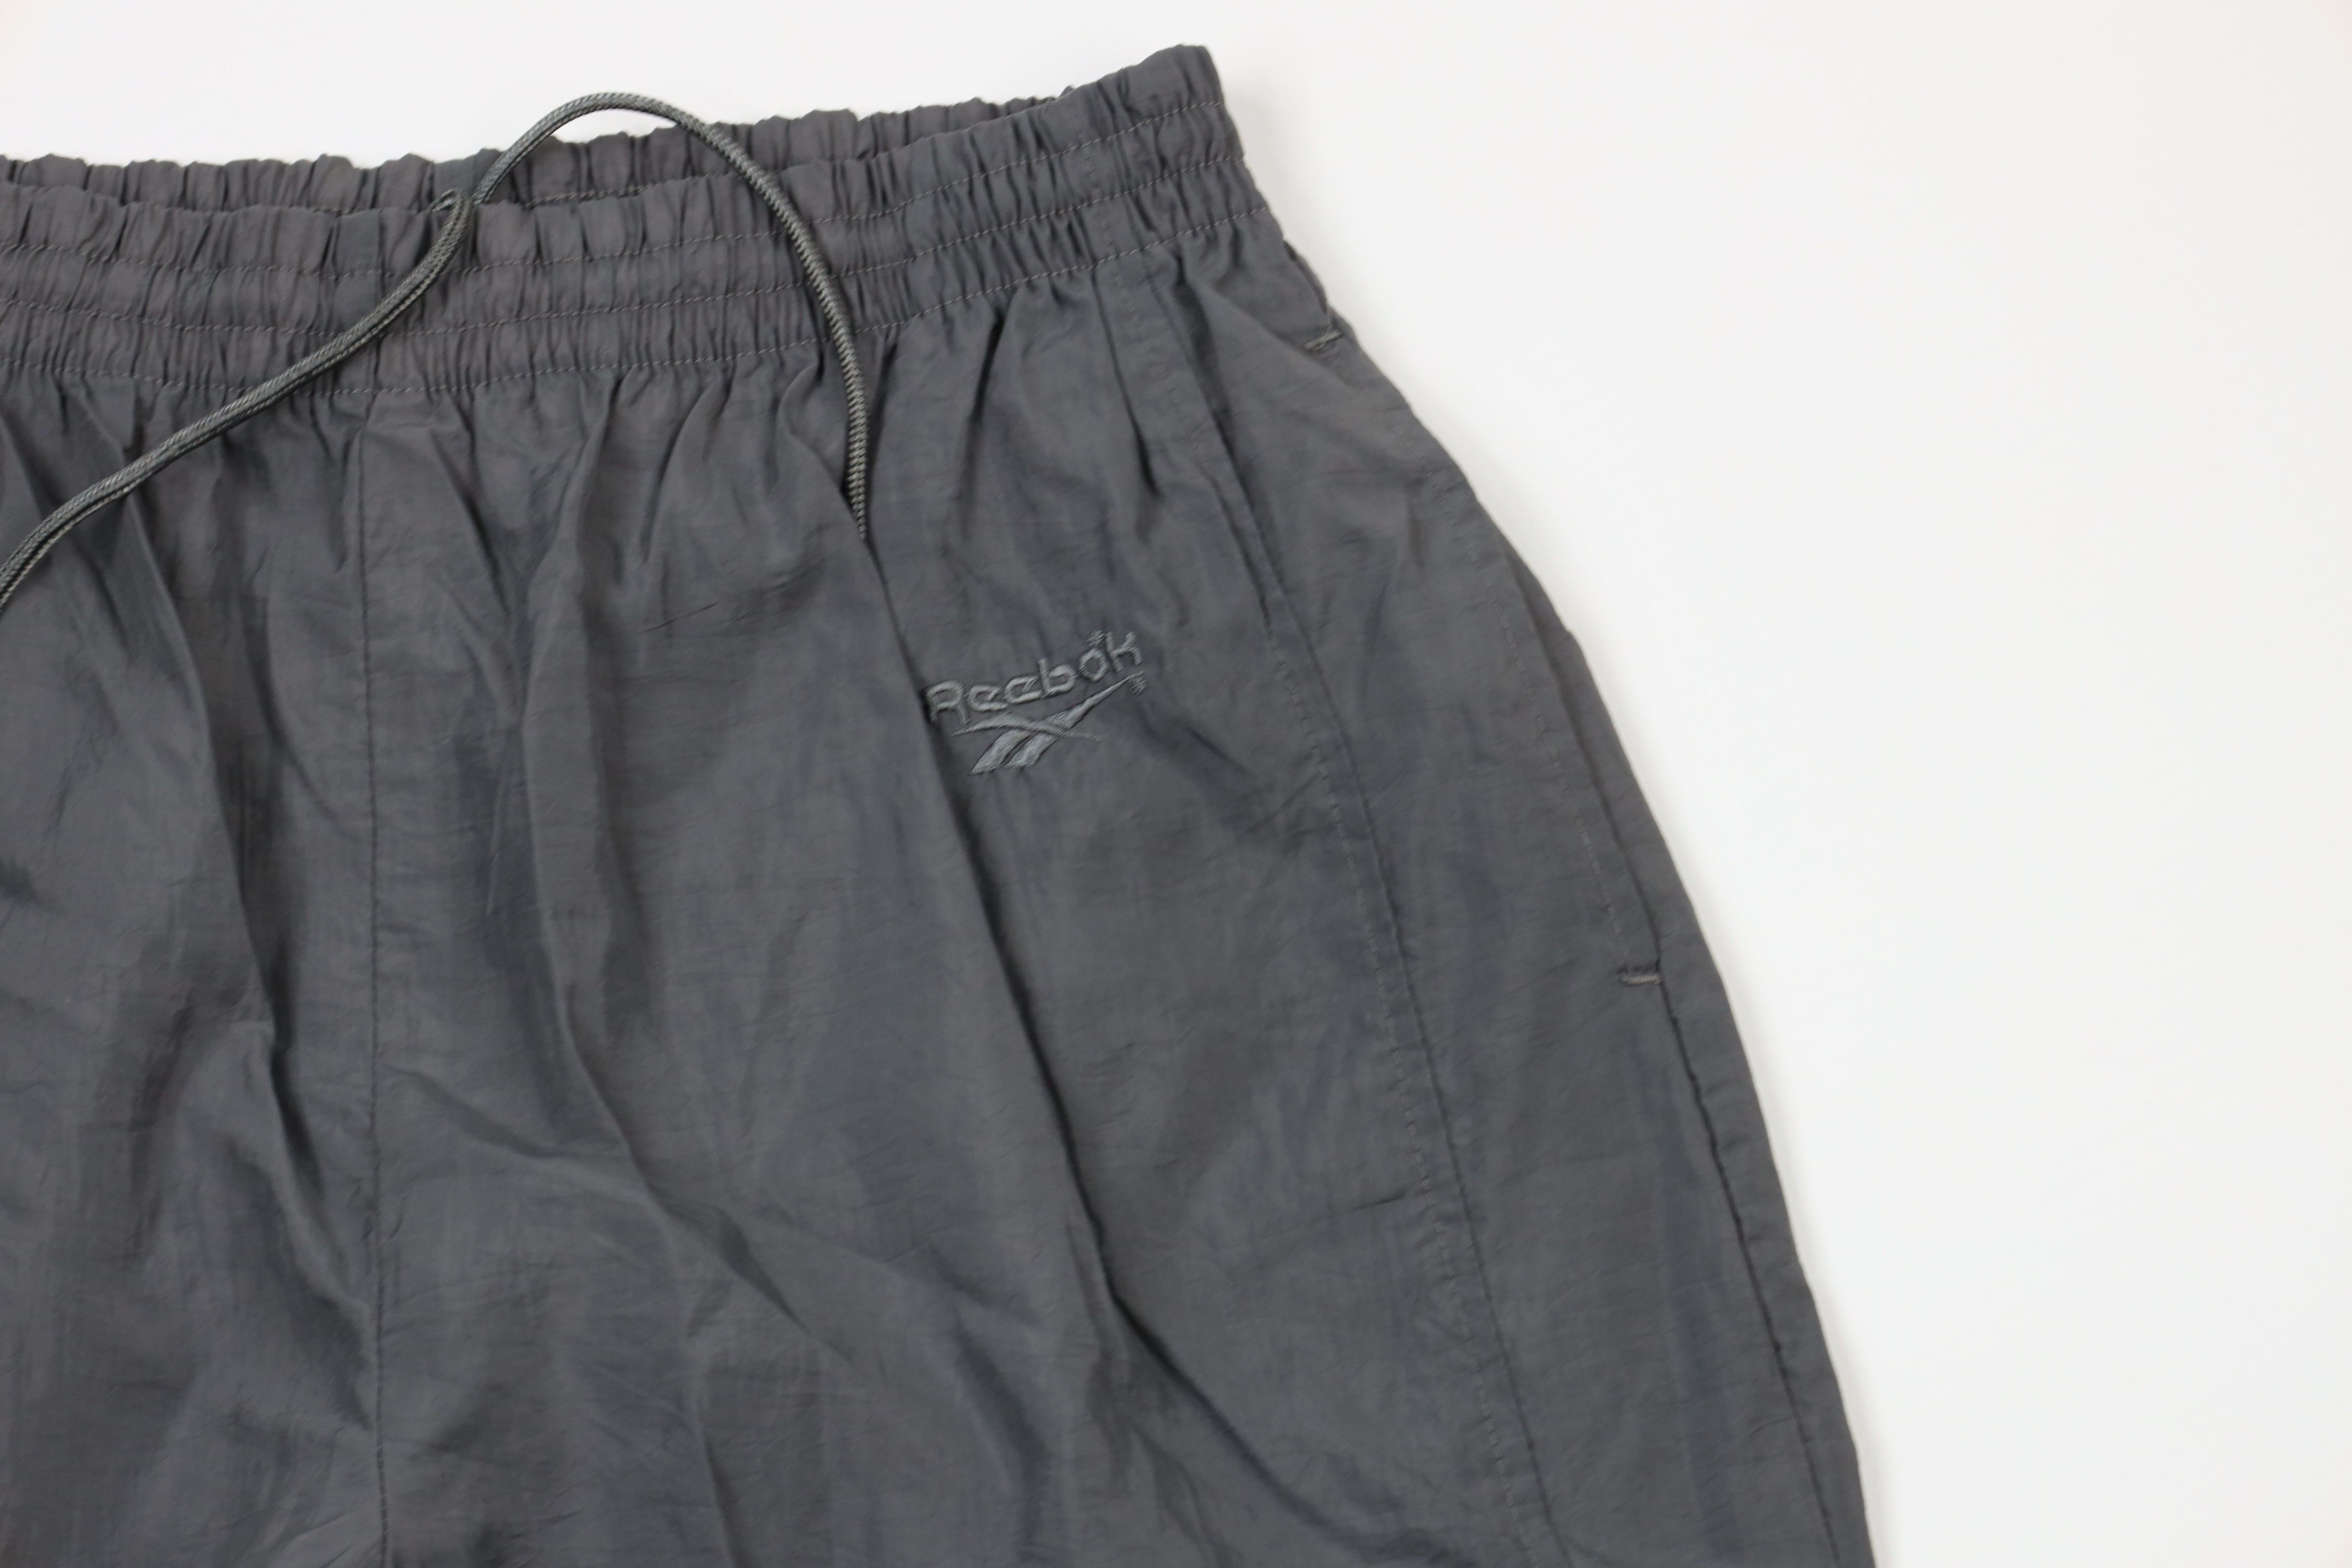 Vintage Vintage 90s Reebok Cuffed Nylon Joggers Jogger Pants Gray Size US 34 / EU 50 - 5 Thumbnail